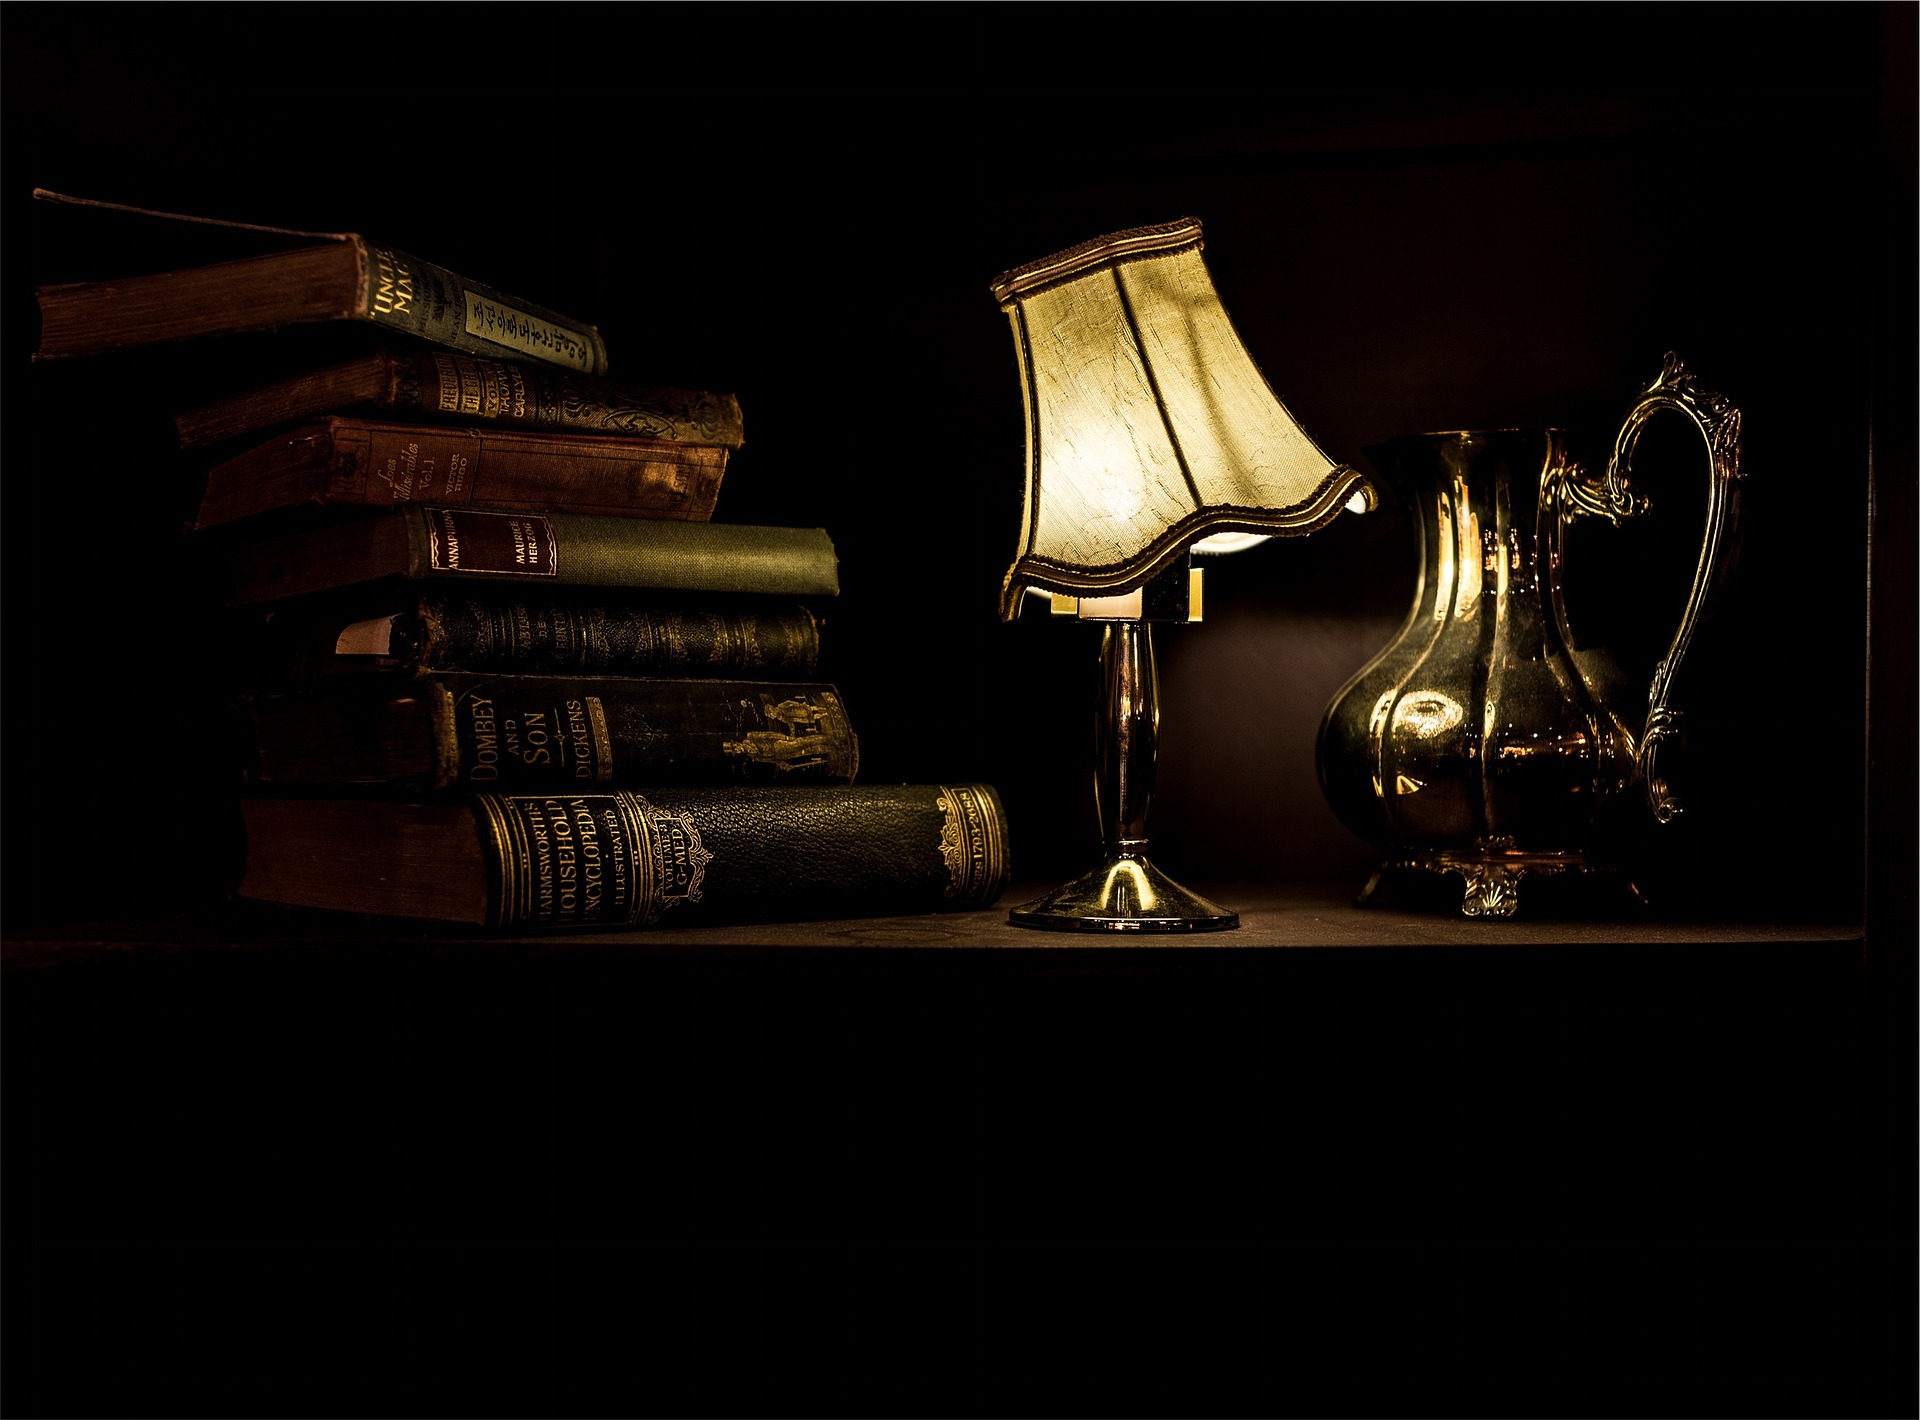 Desk Lamp with books on desk